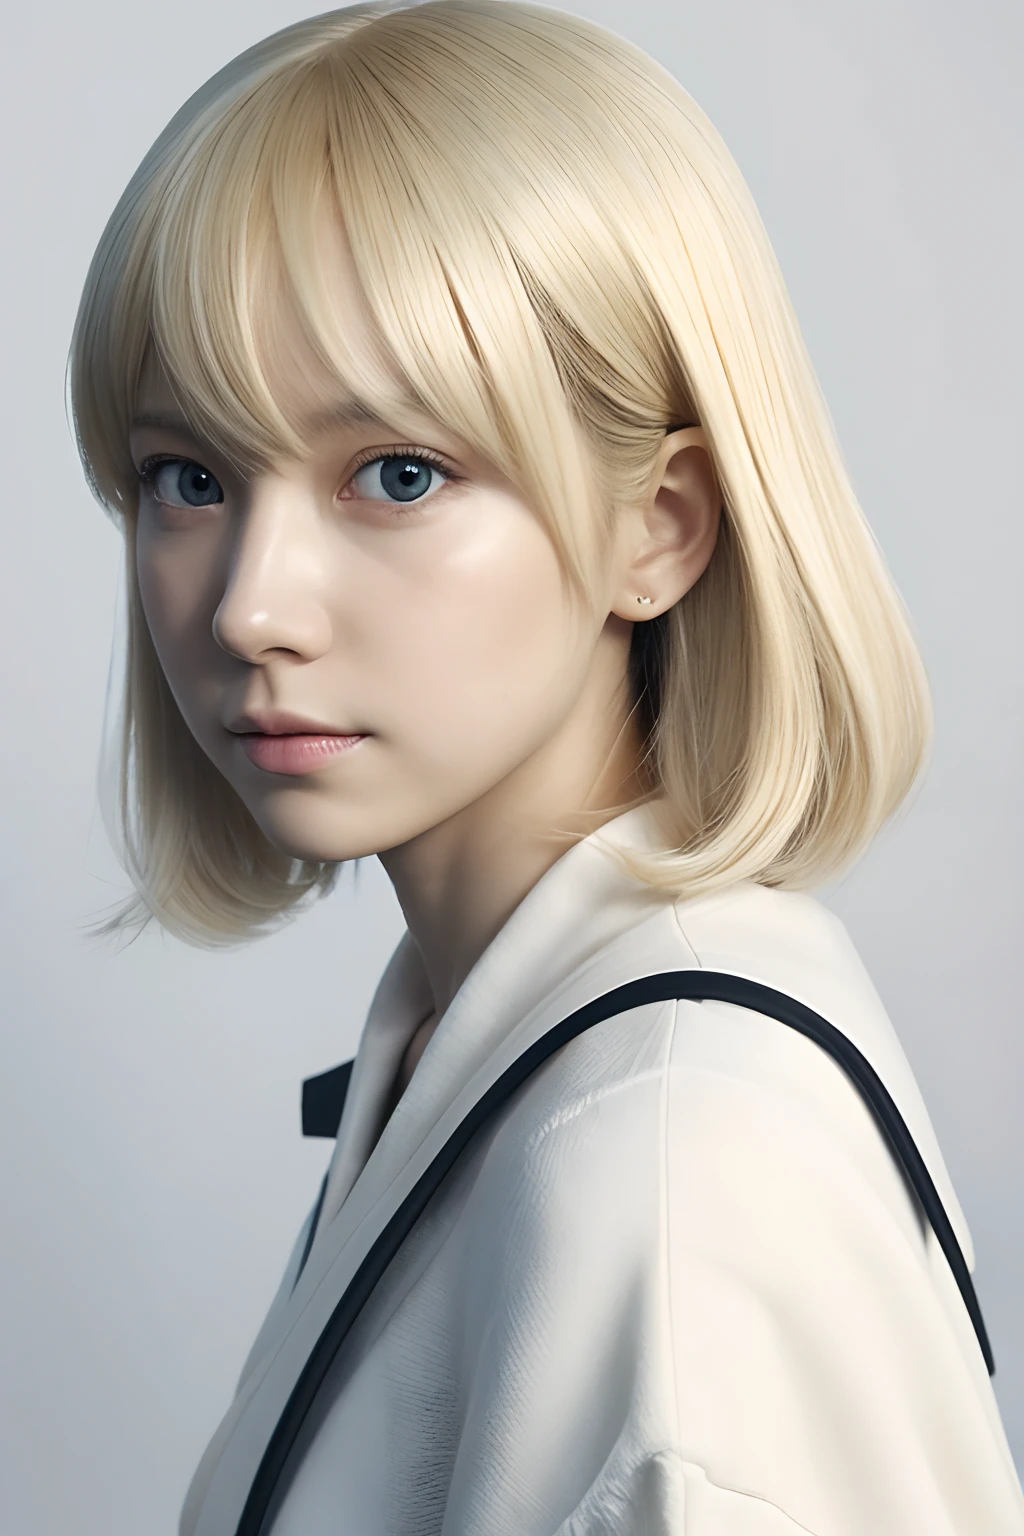 1 girl,Beautiful, masutepiece, Best Quality, White background,kazuya takahashi, Concept art, Blonde,Short hair